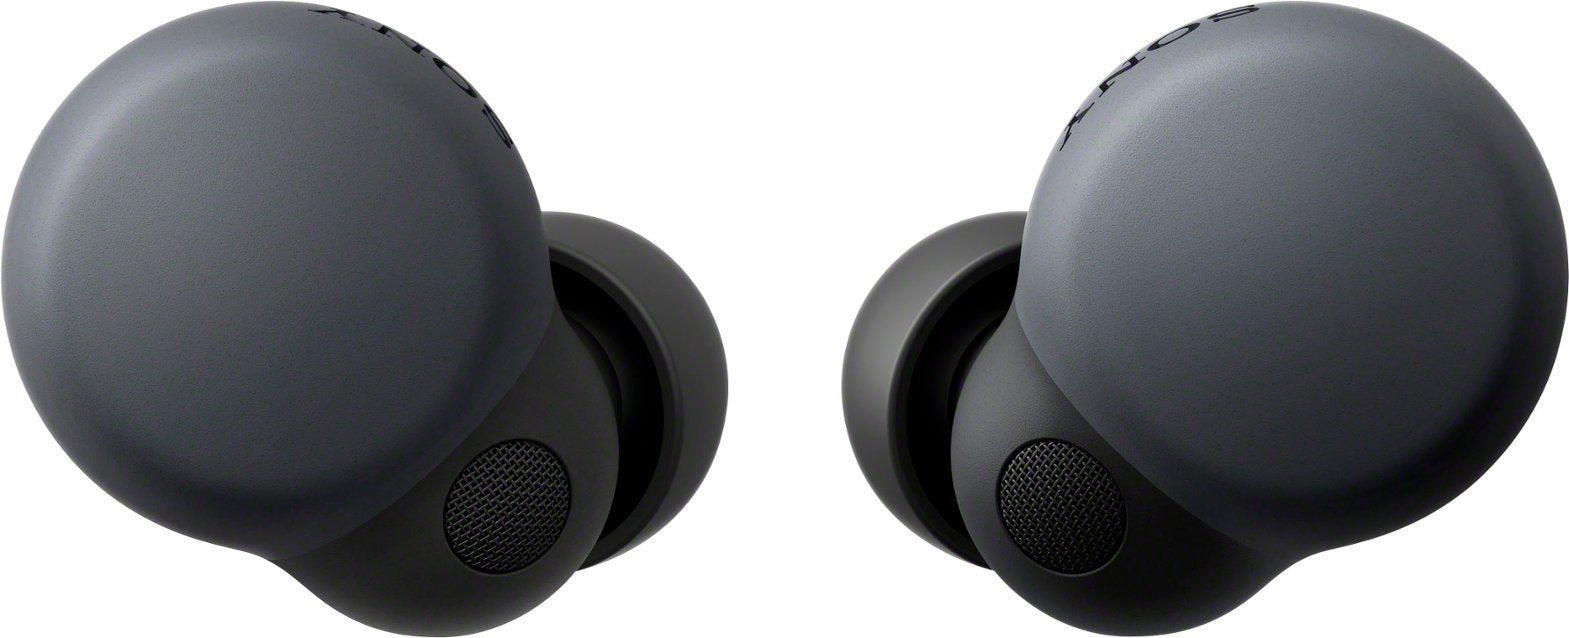 Sony LinkBuds S True Wireless  Bluetooth Noise Canceling Earbuds - Black (Refurbished)